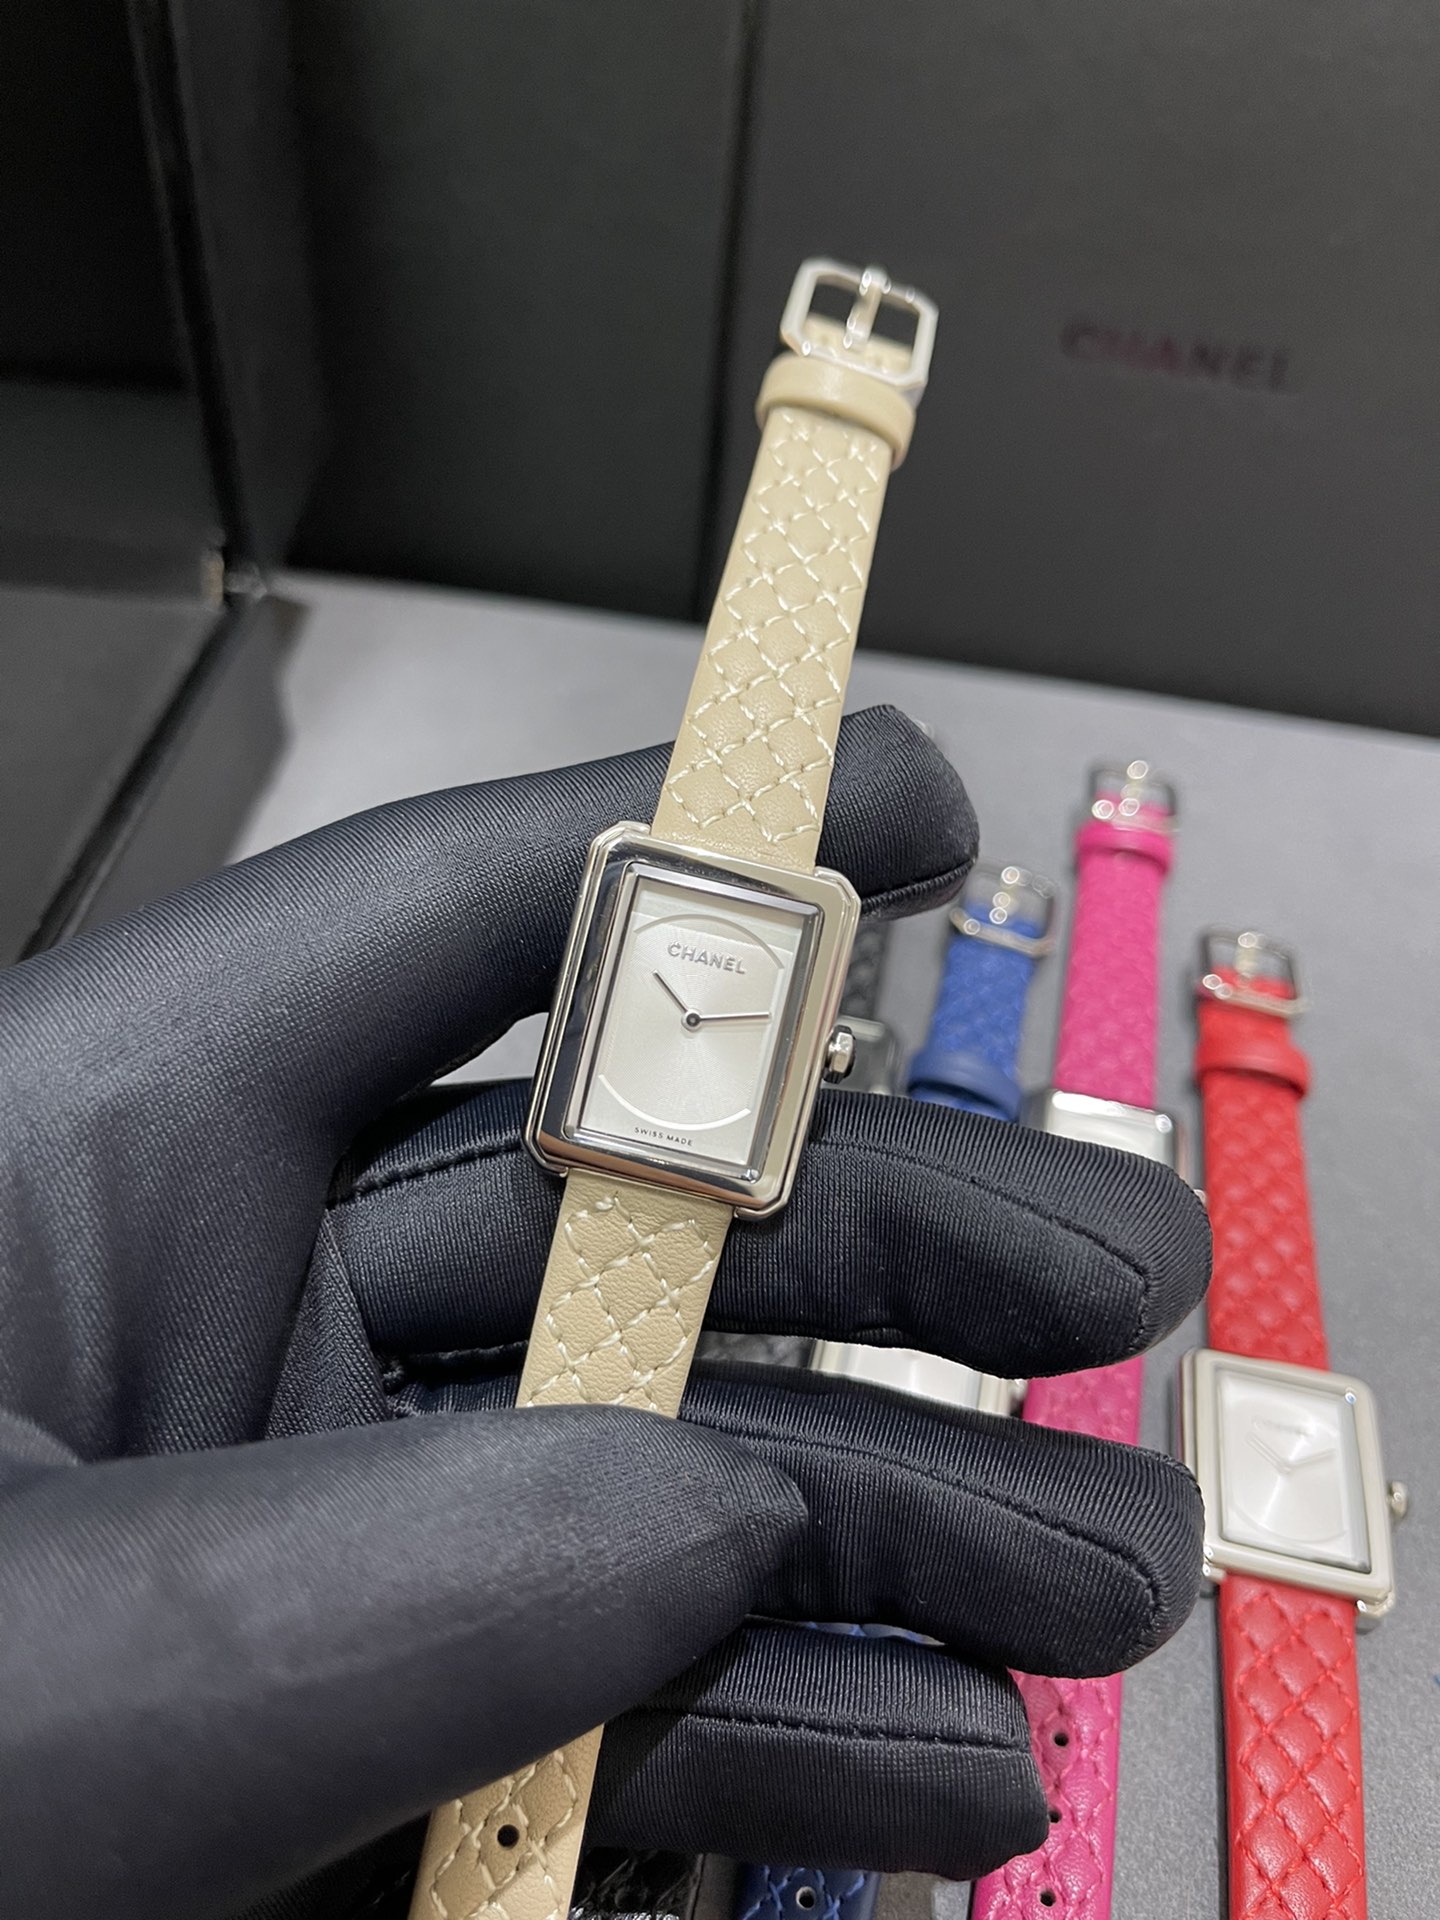 CHANEL シャネル 腕時計 値段激安通販 優雅 レディース専用 薄いワッチ プレゼント シンプル 多色可選 _3